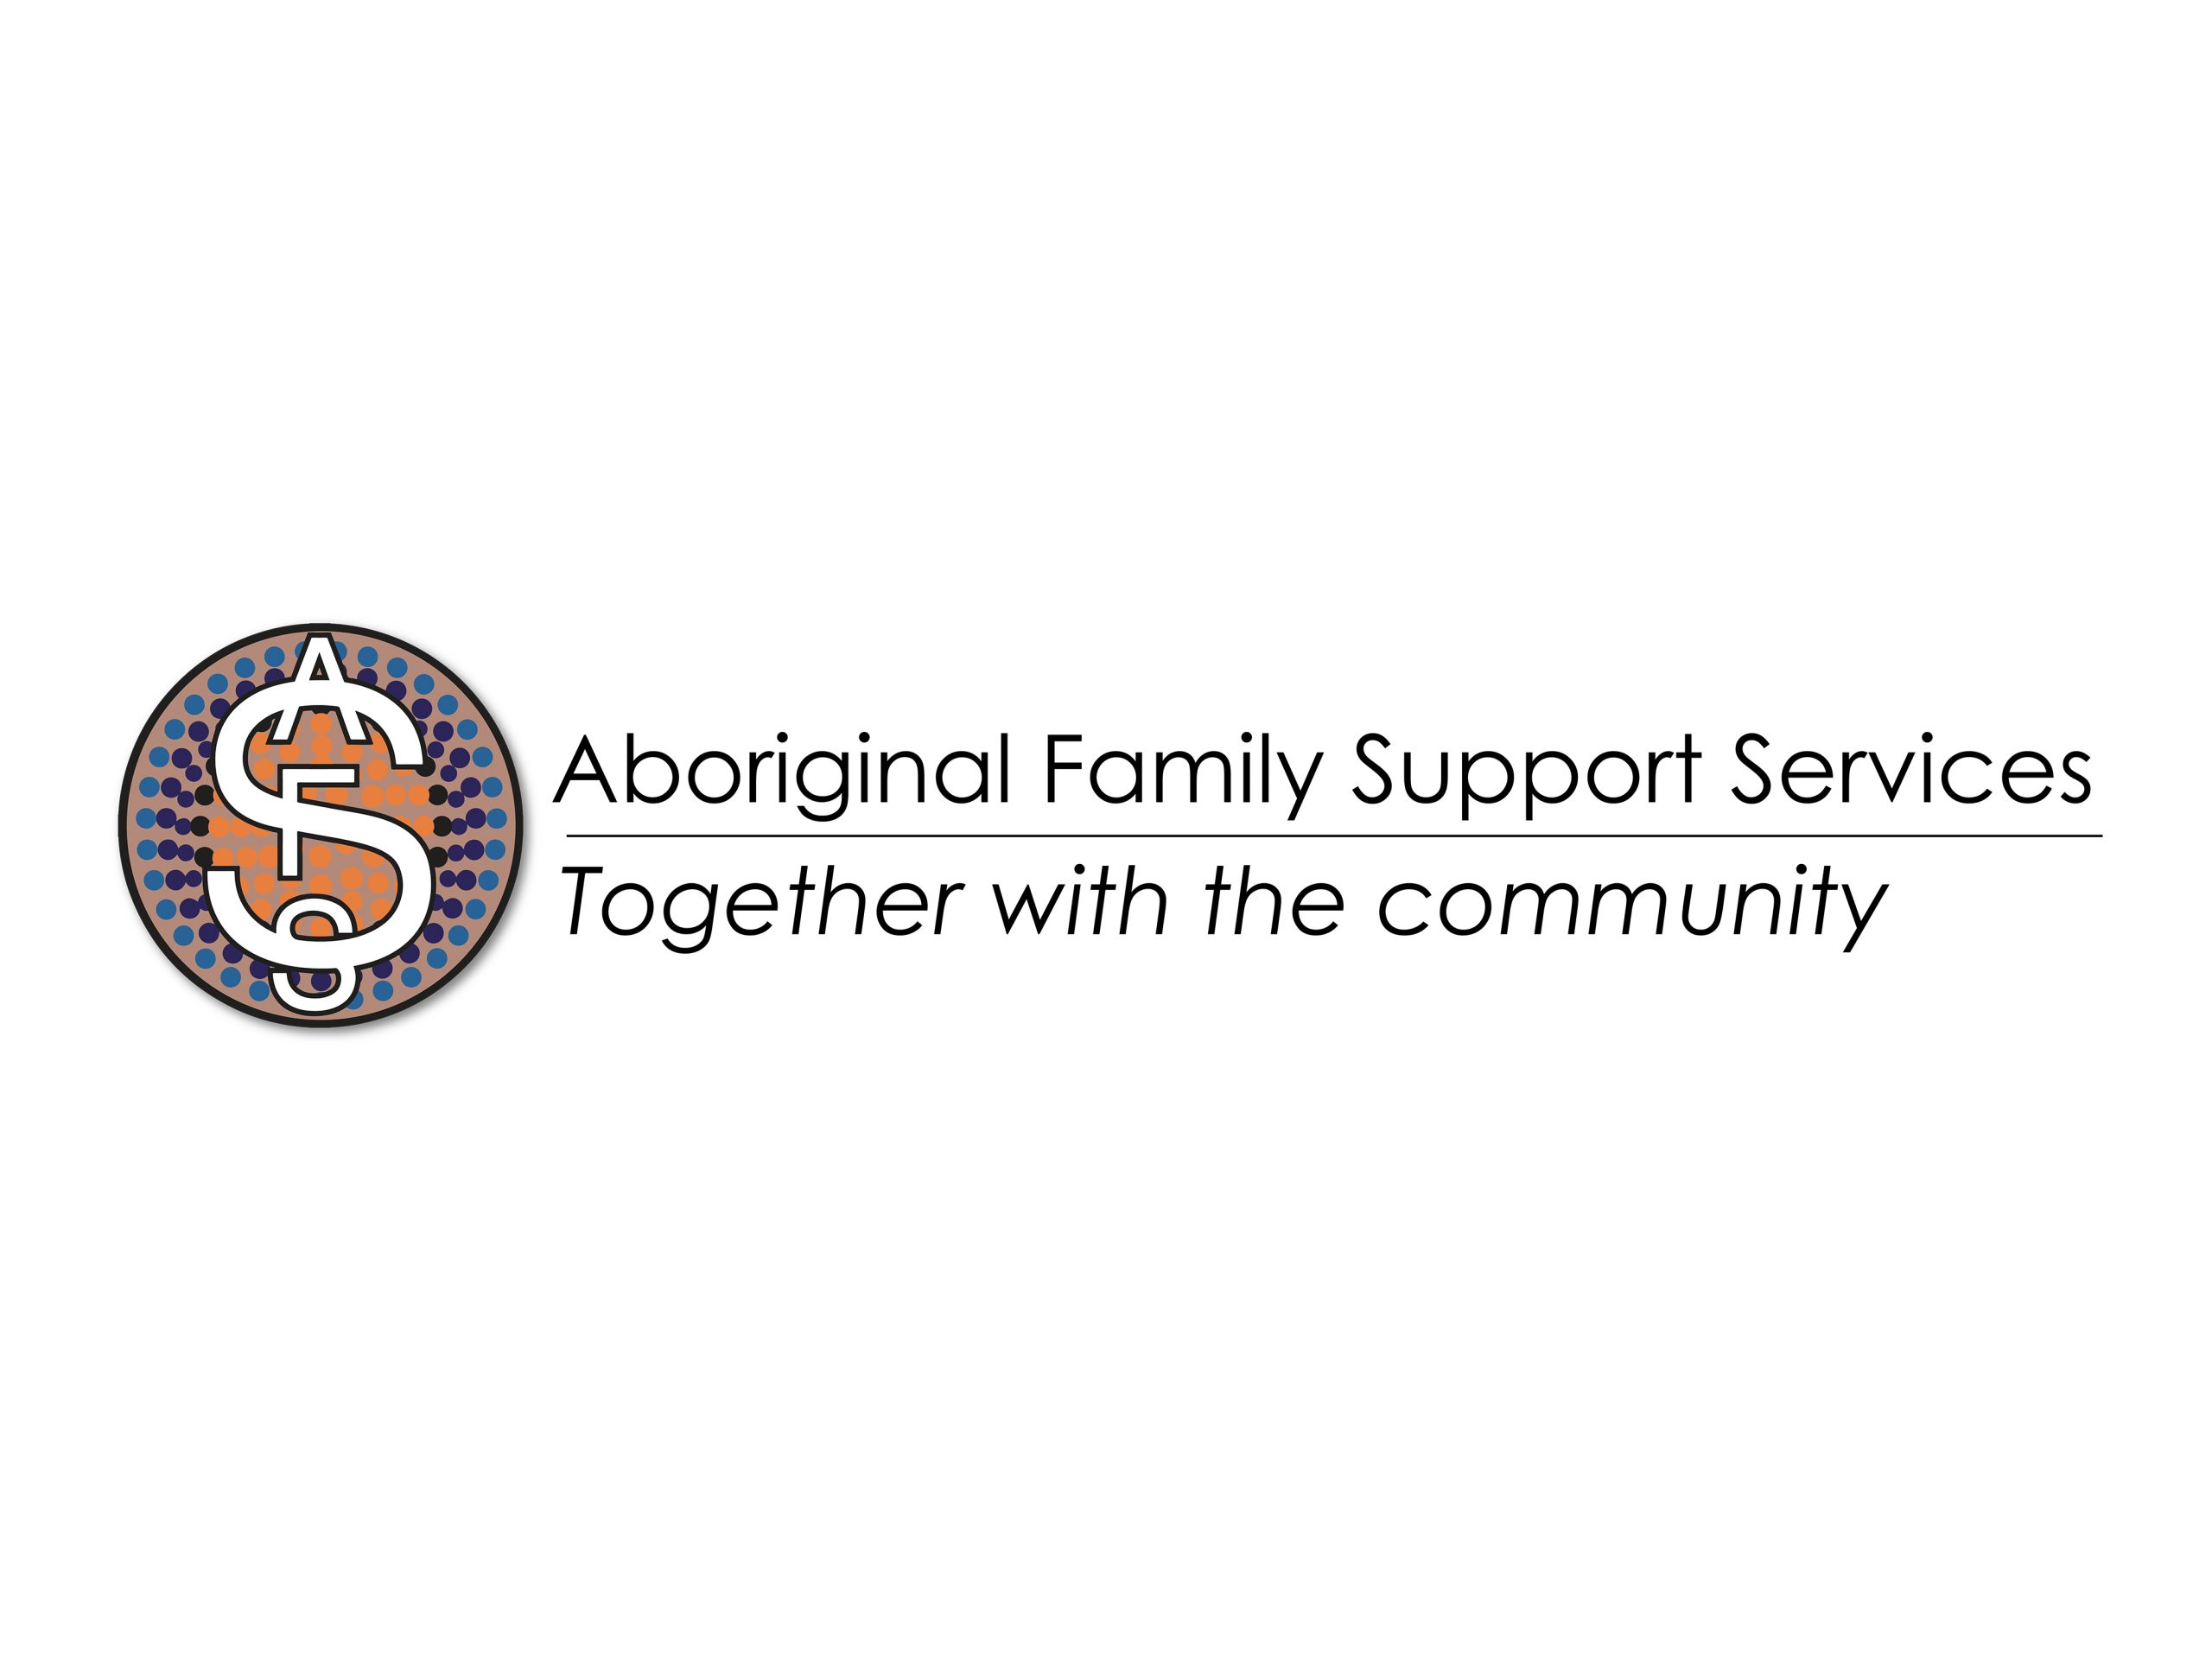 Aboriginal Family Support Services logo